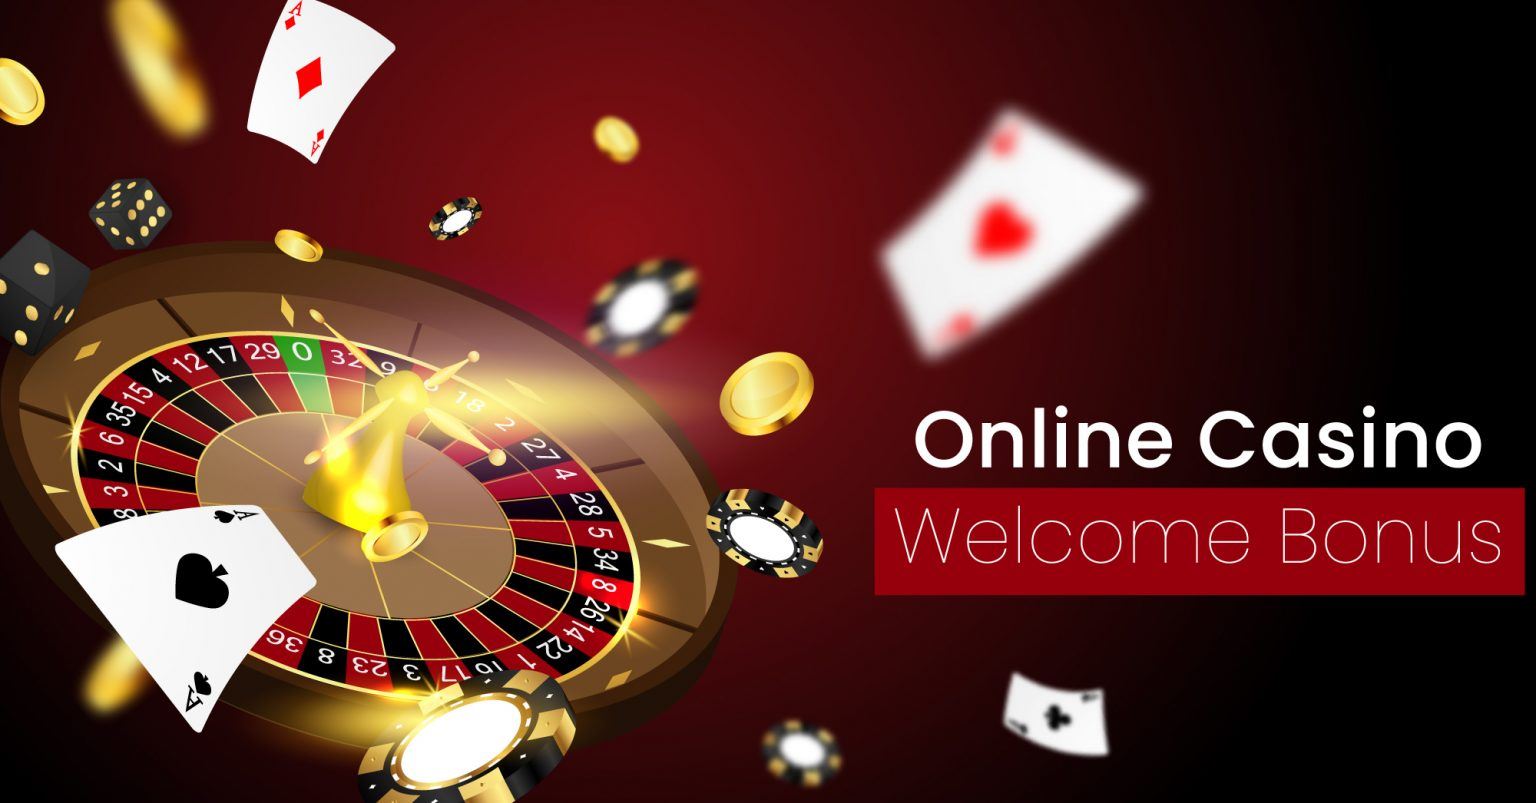 Mobile Casino Free Sign Up Bonus Gambling